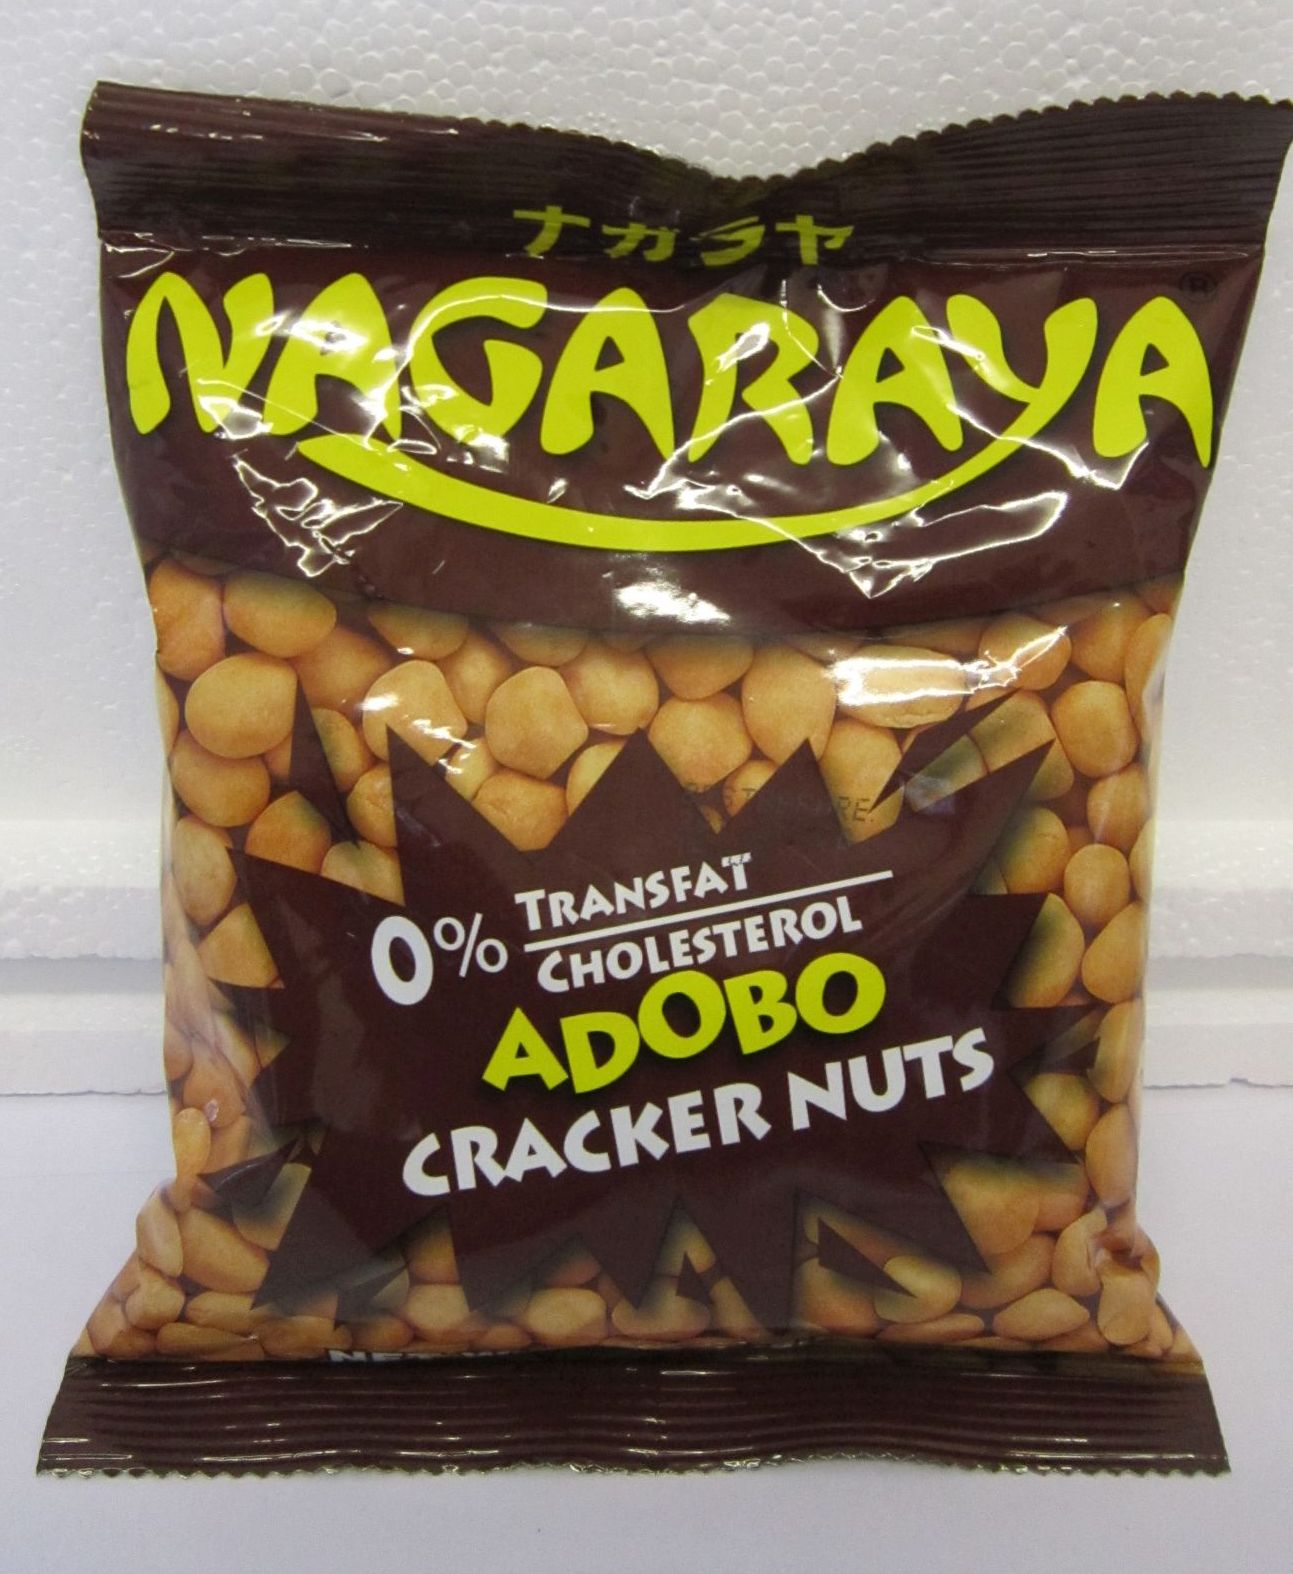 Nagaraya Adobo Cracker Nuts Image